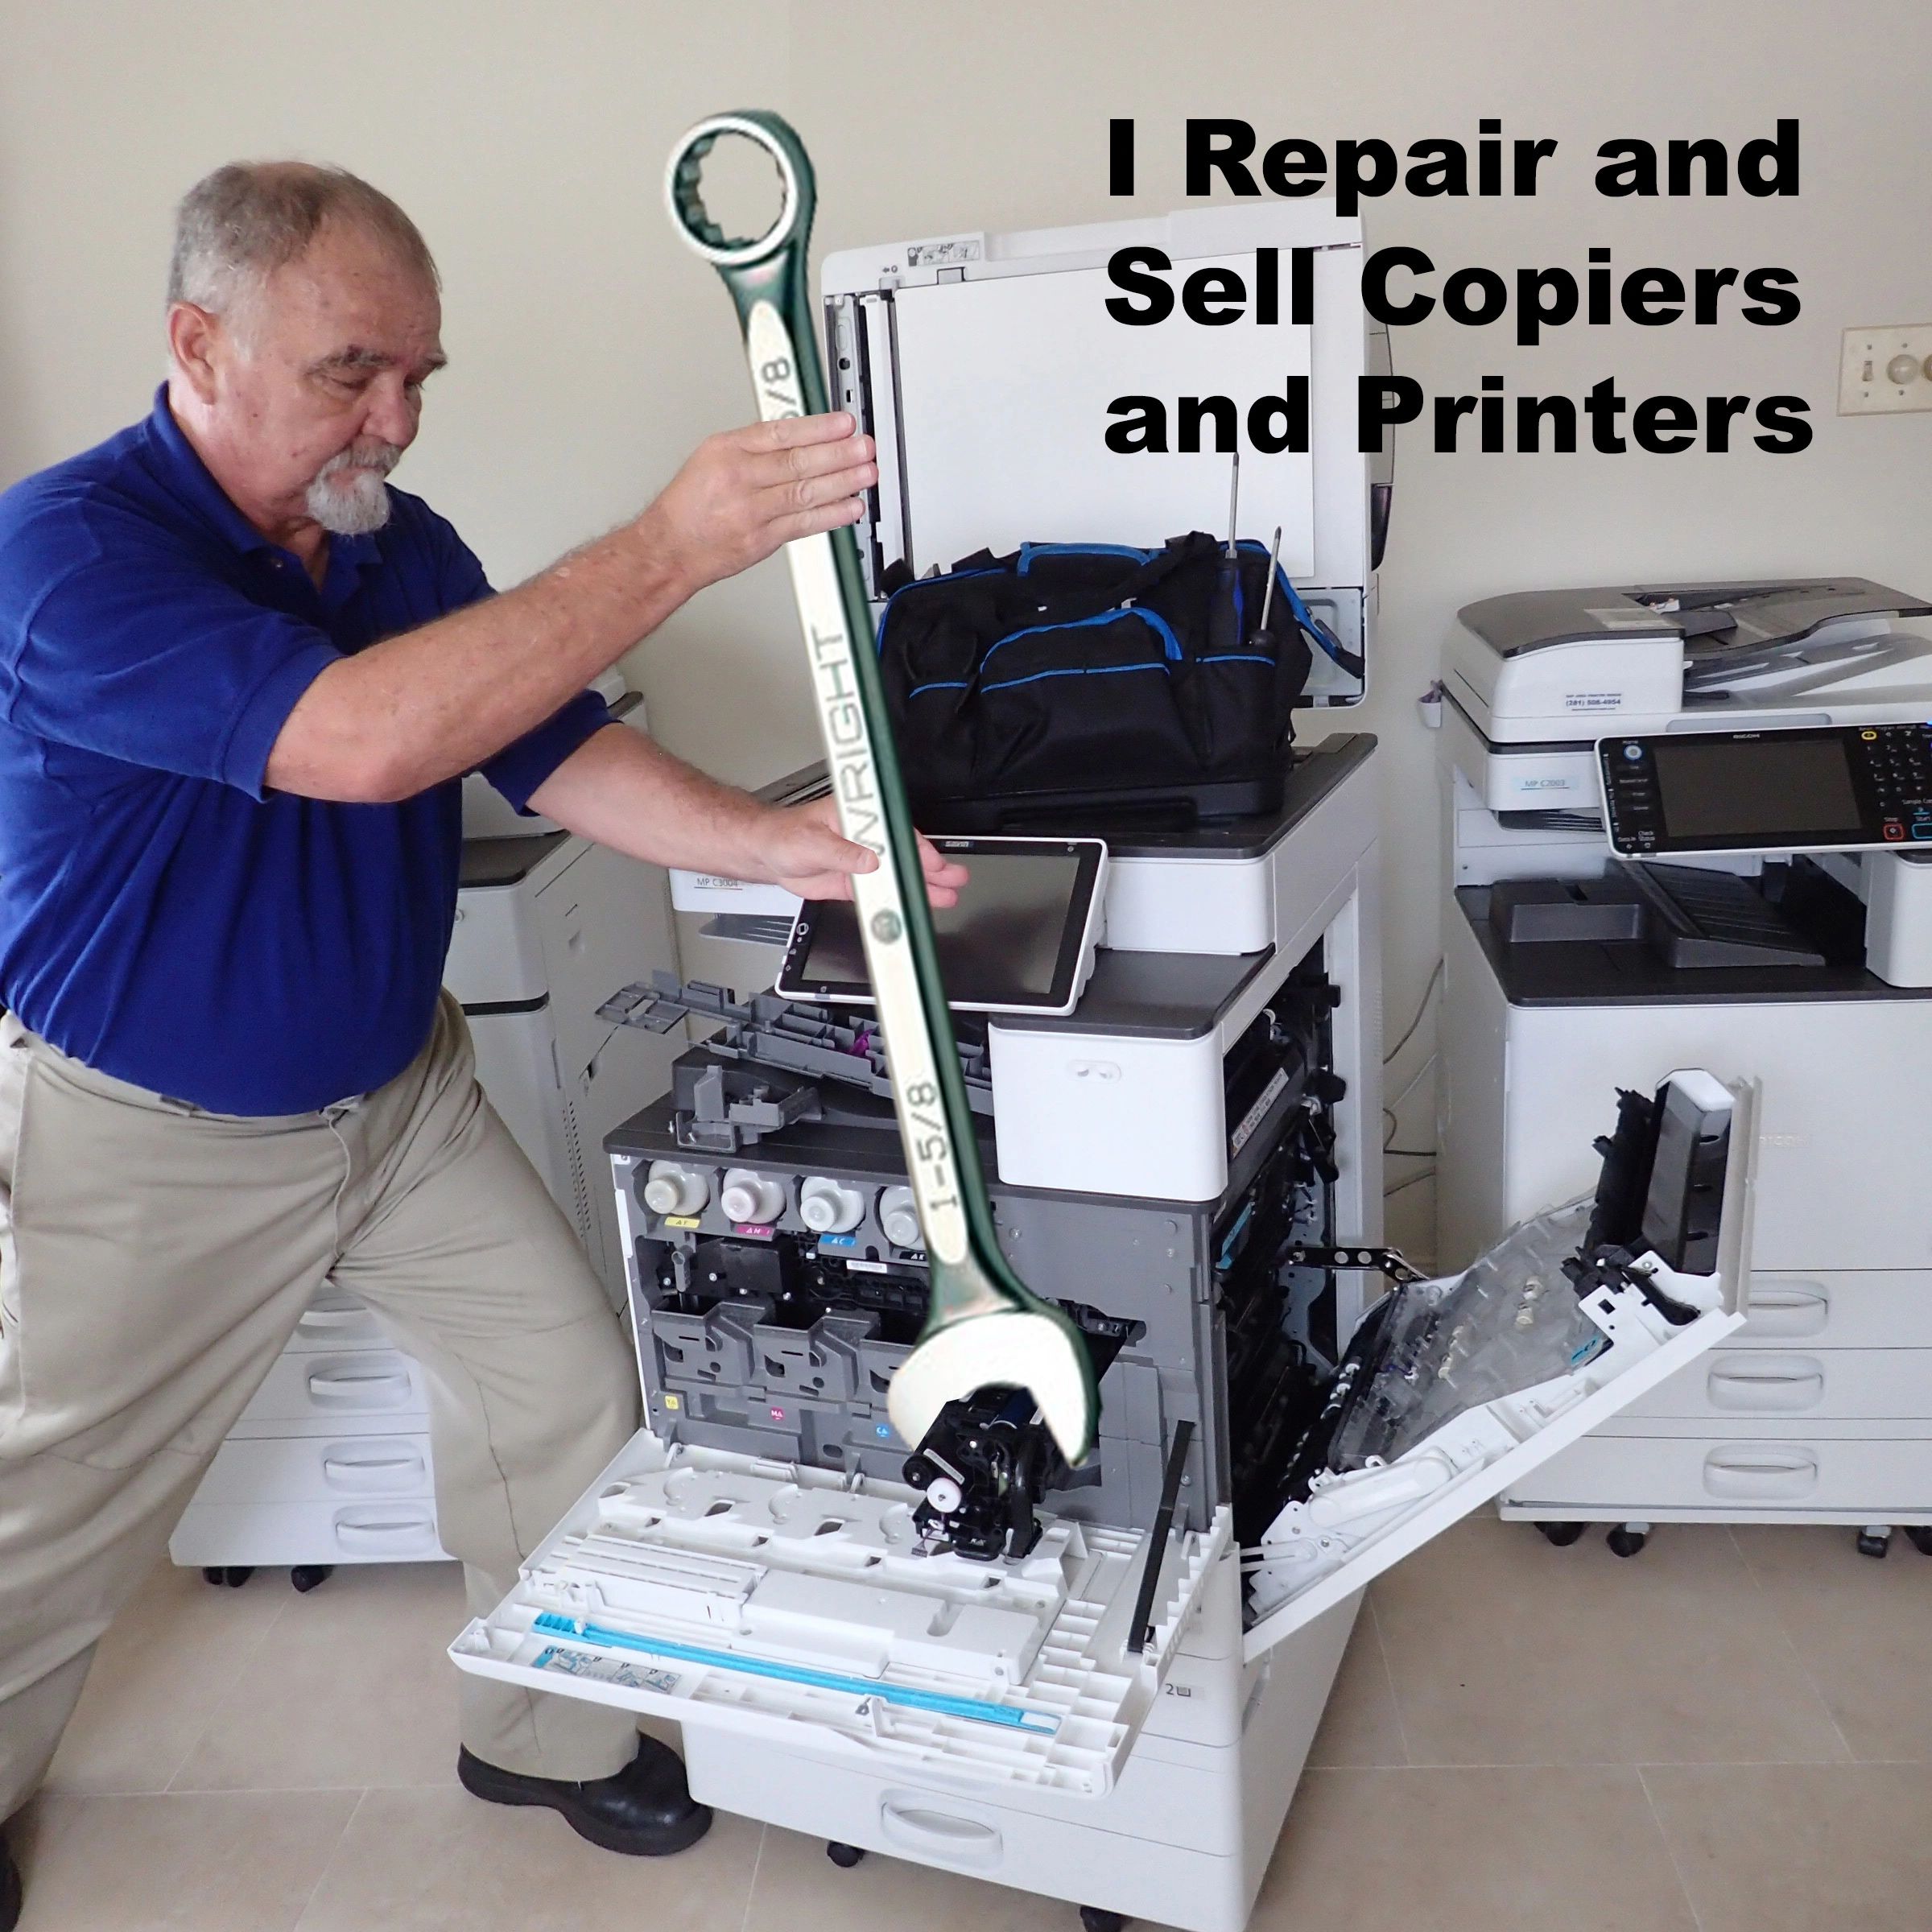 Copier Technician working on a copier.